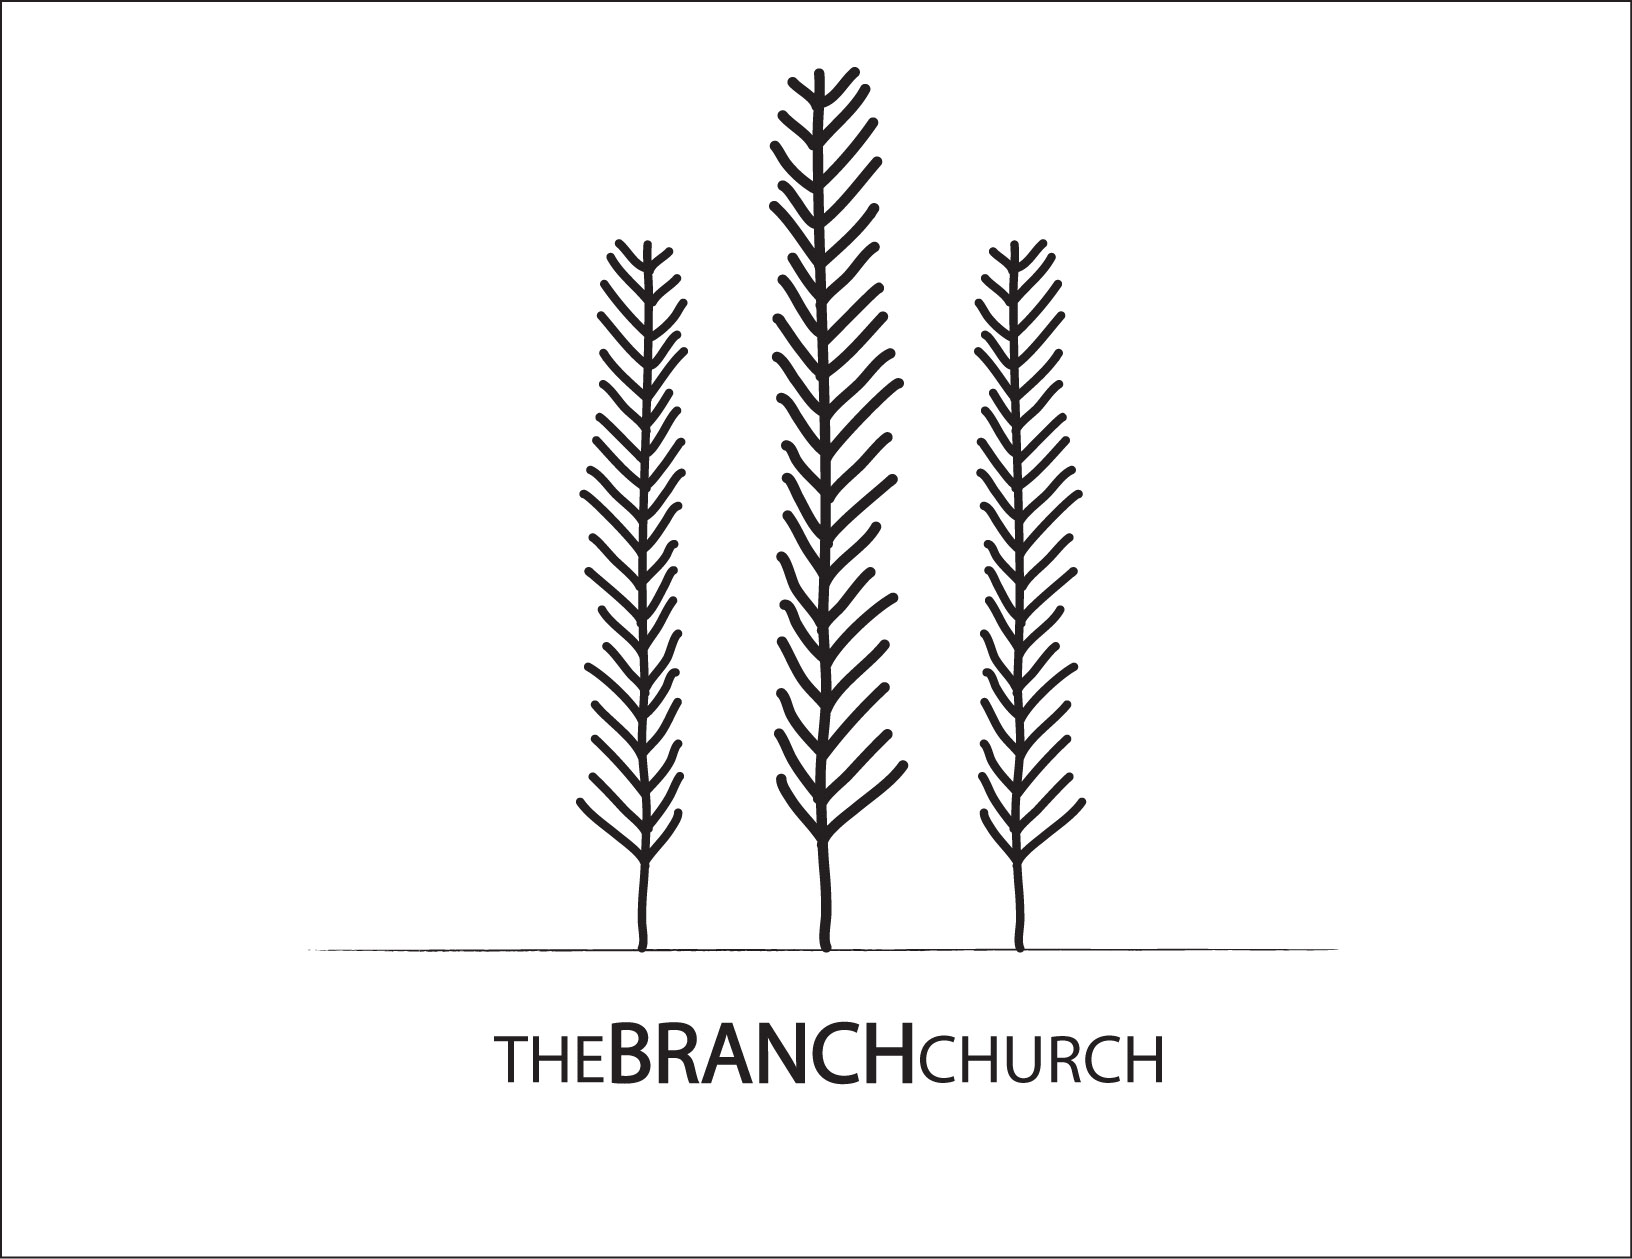 The Branch Church